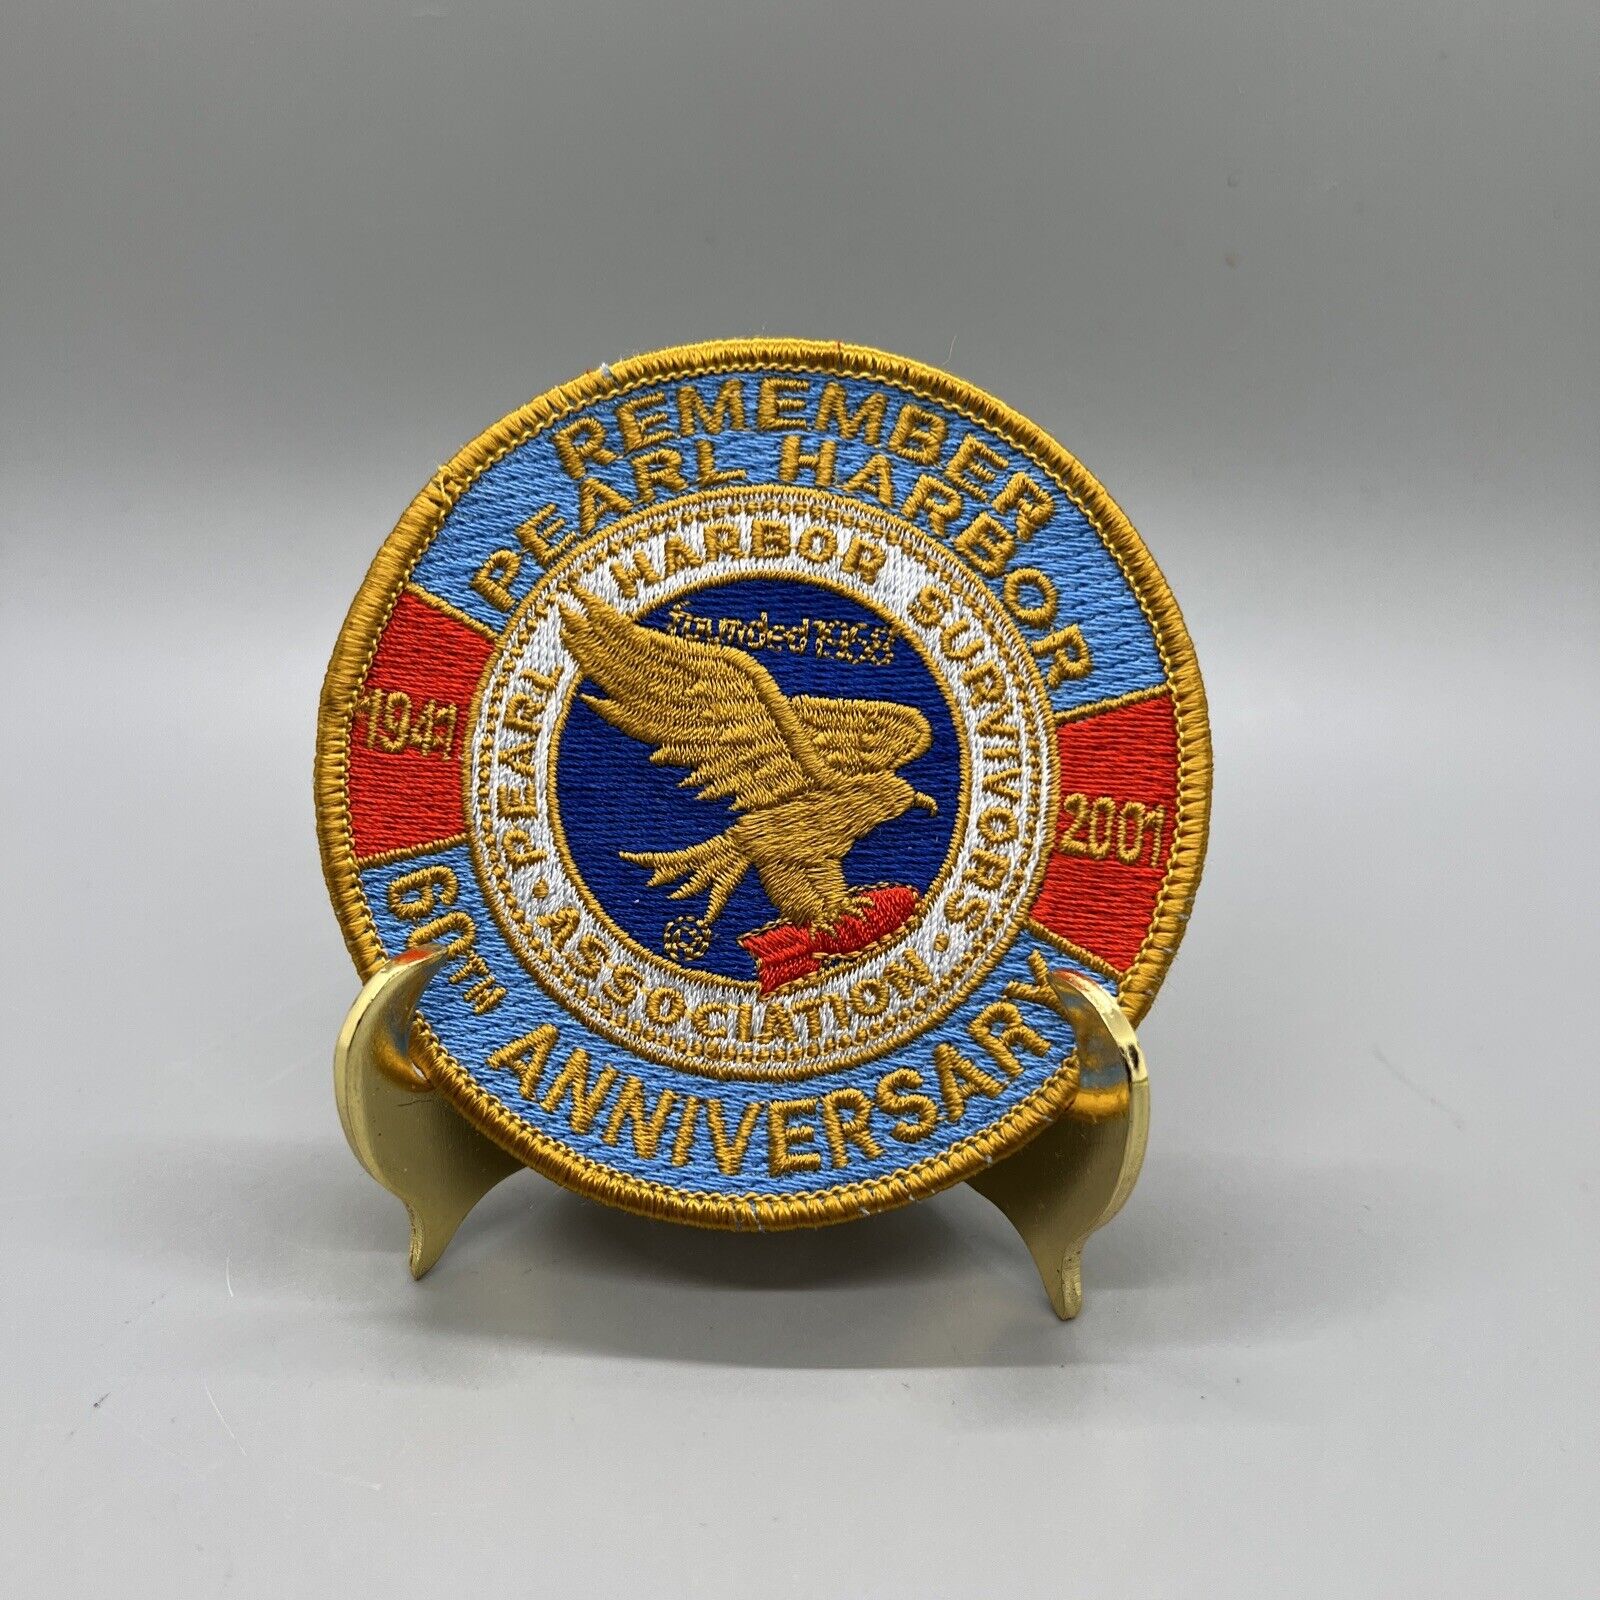 Pearl Harbor Survivors Association eagle Patch Emblem WWII Collectible 3.5” War